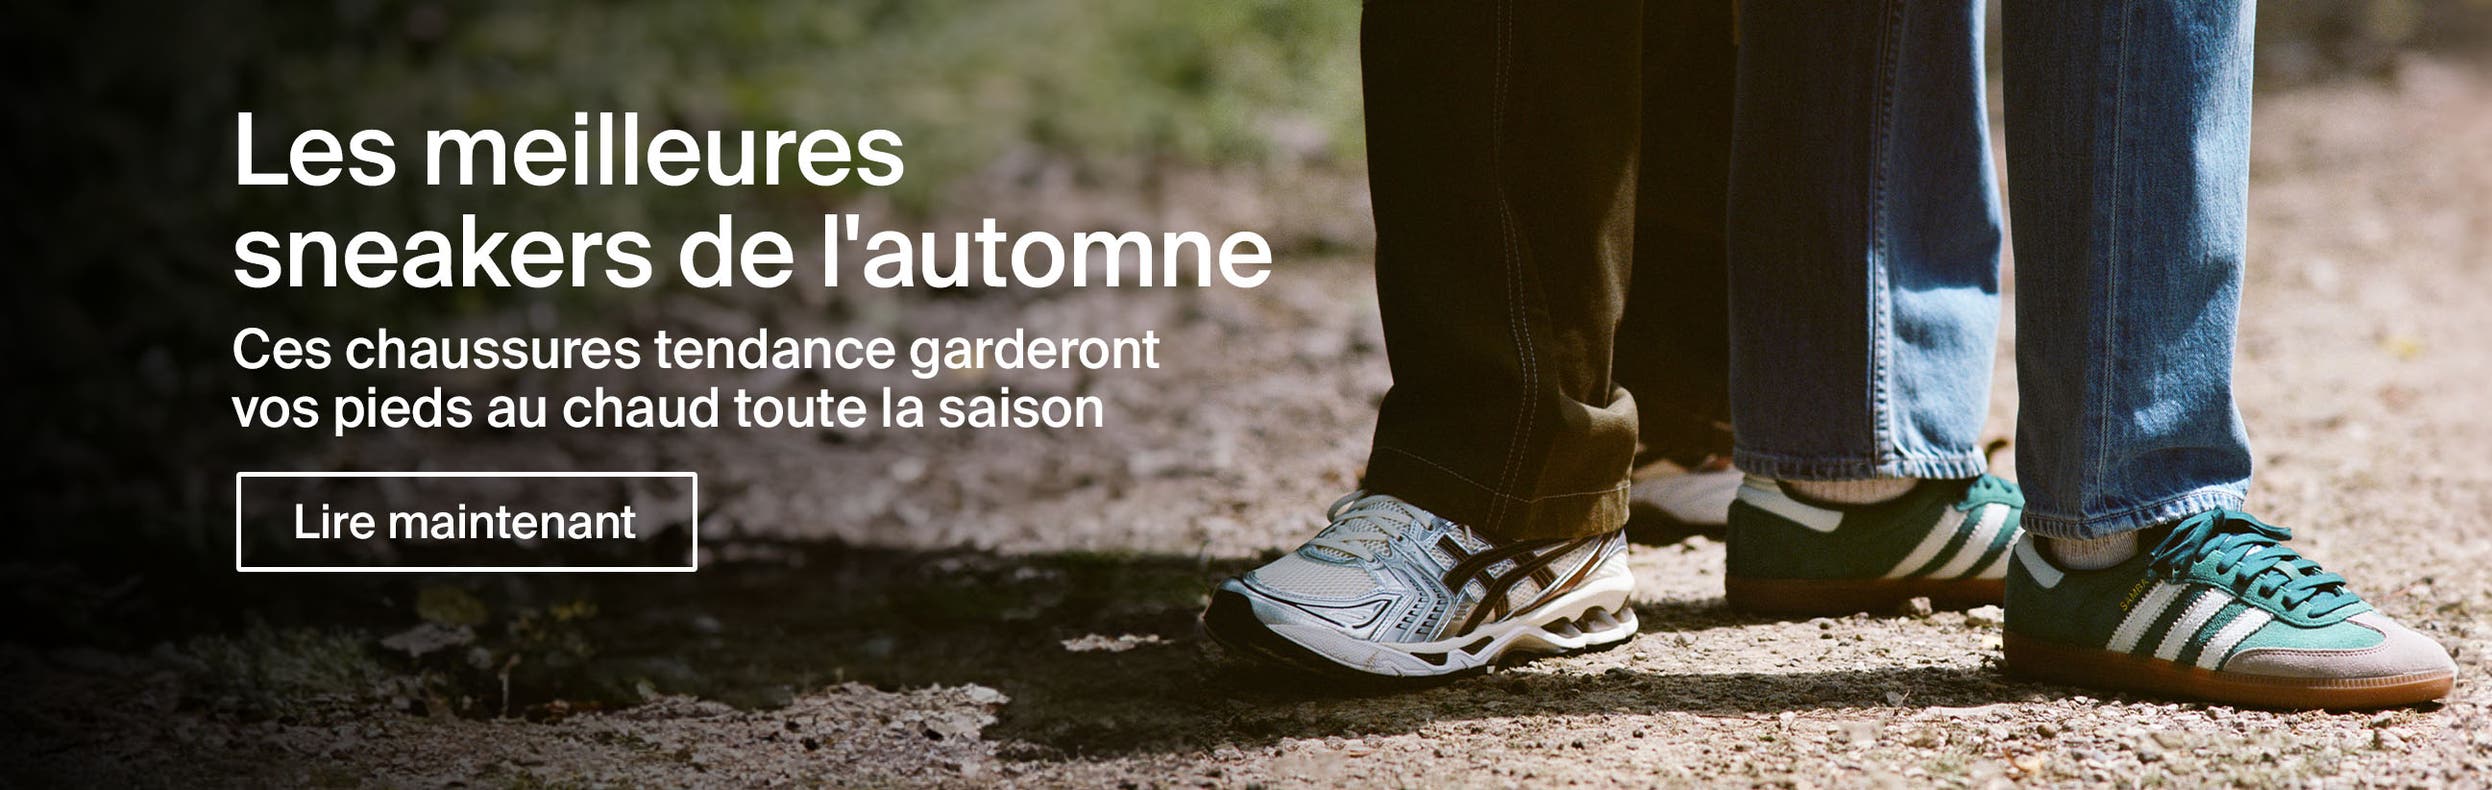 Falls-Trendiest-Sneakers-French-Editorial_BannerPrimary_Desktop.jpg